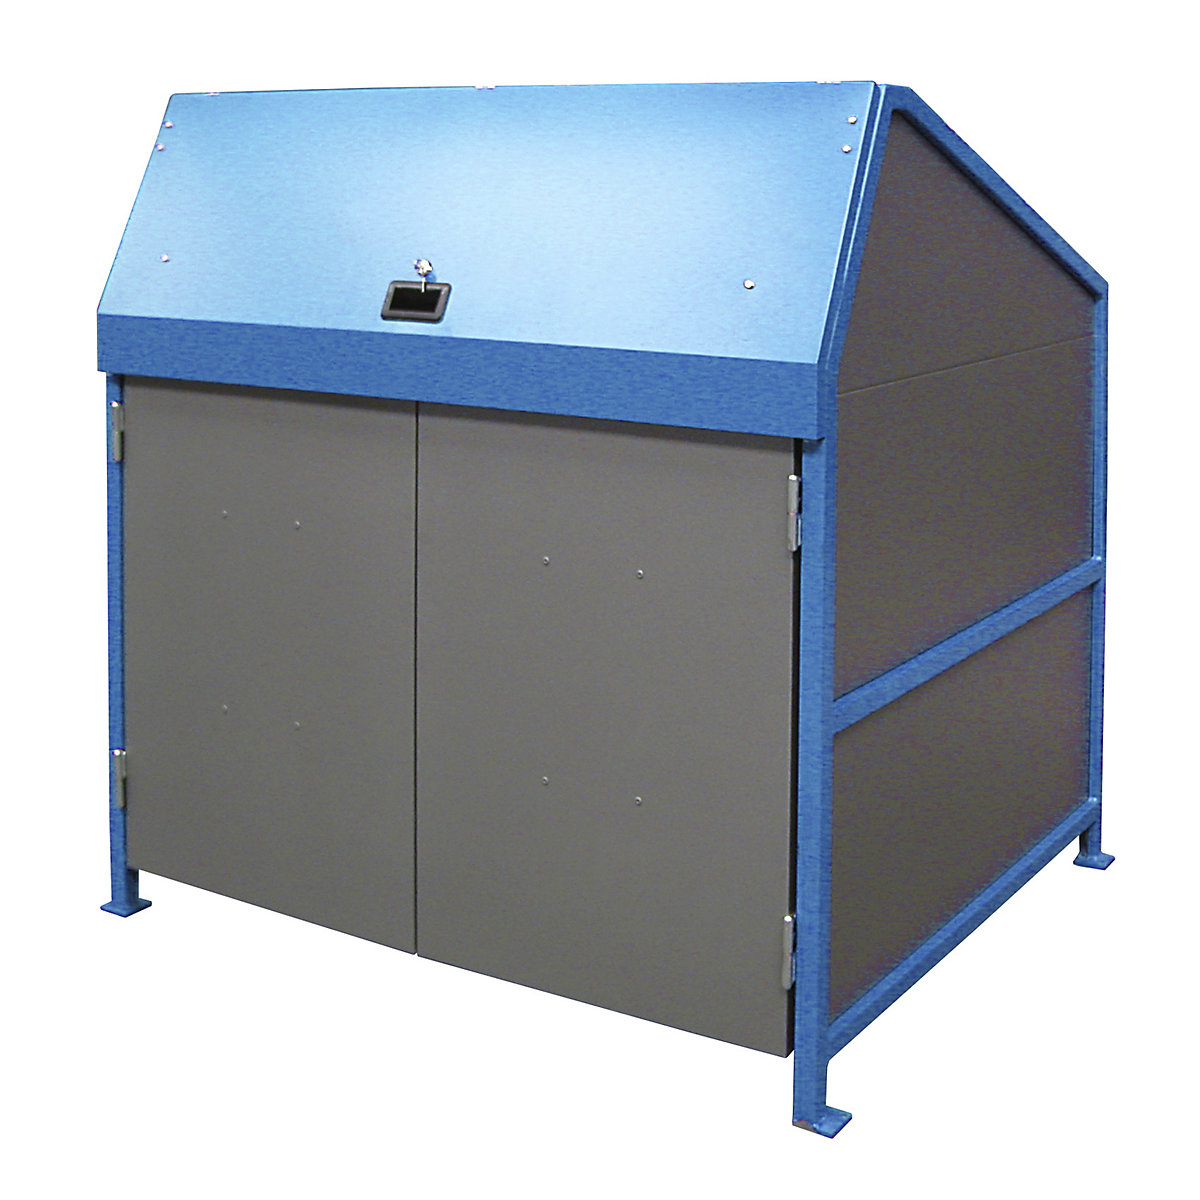 Waste bin enclosures – eurokraft pro, enclosed on 4 sides, with doors, frame in blue